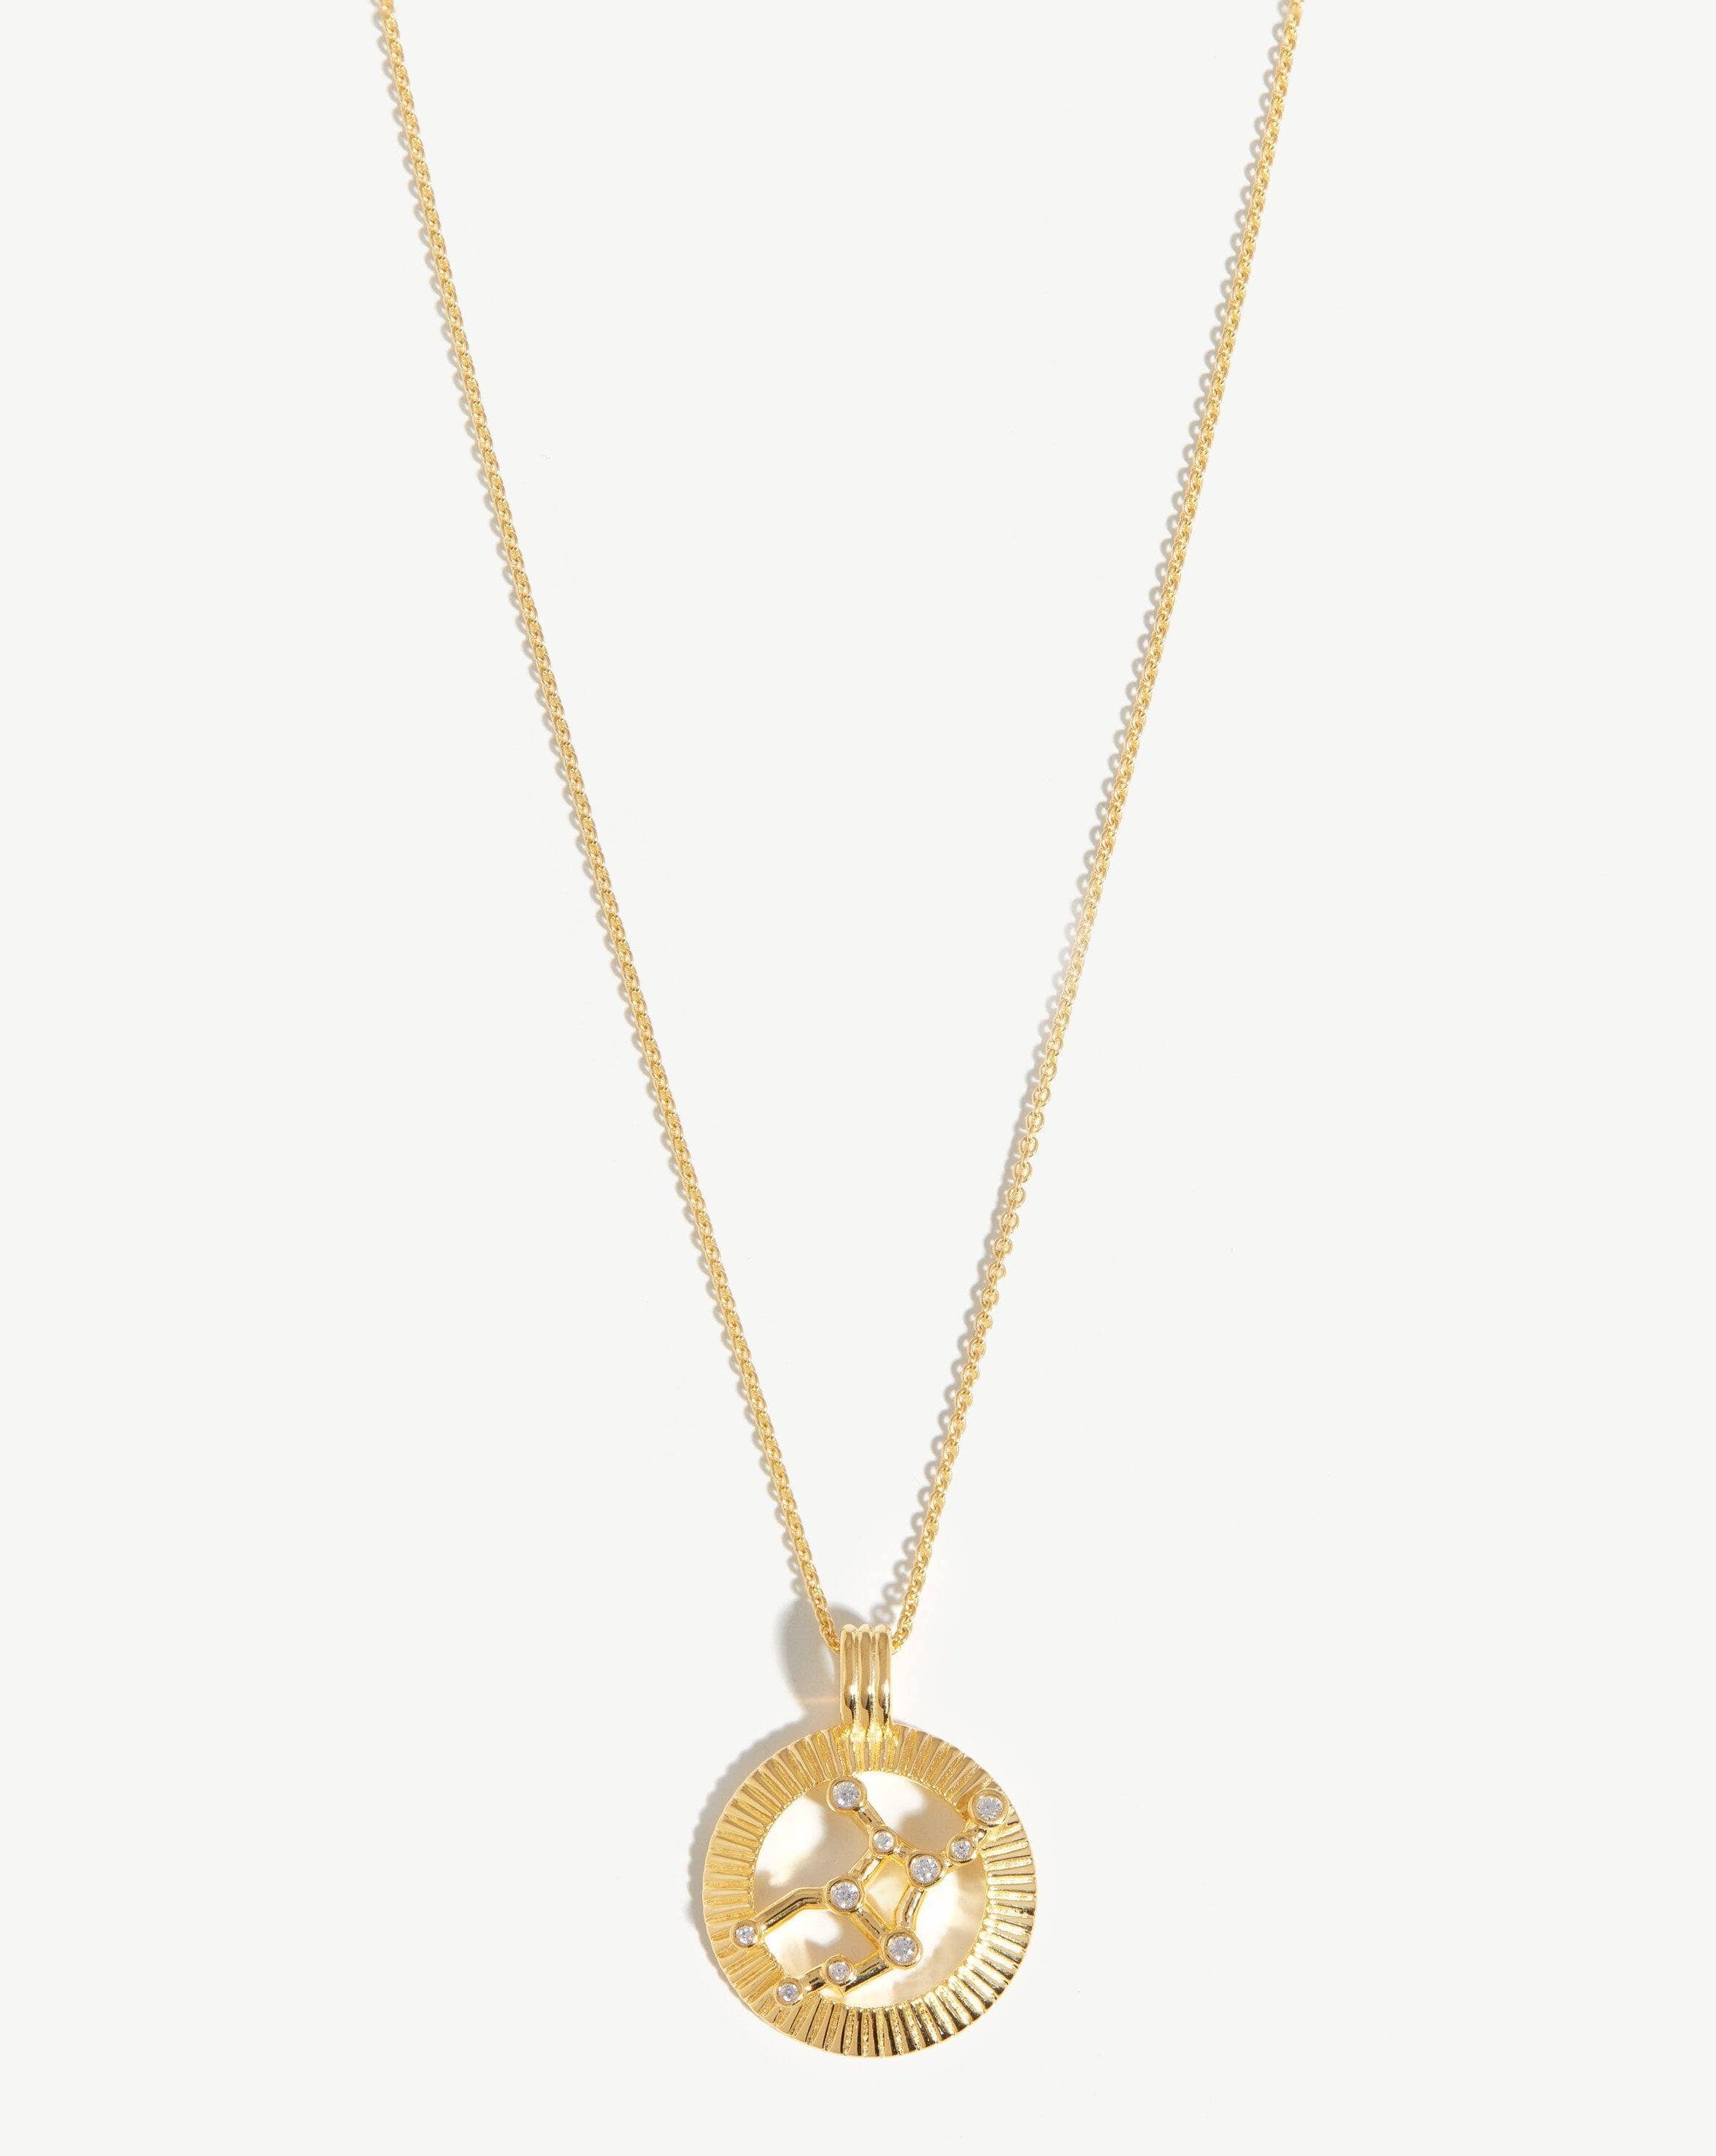 Zodiac Constellation Pendant Necklace - Virgo | 18ct Gold Plated Vermeil/Virgo Necklaces Missoma 